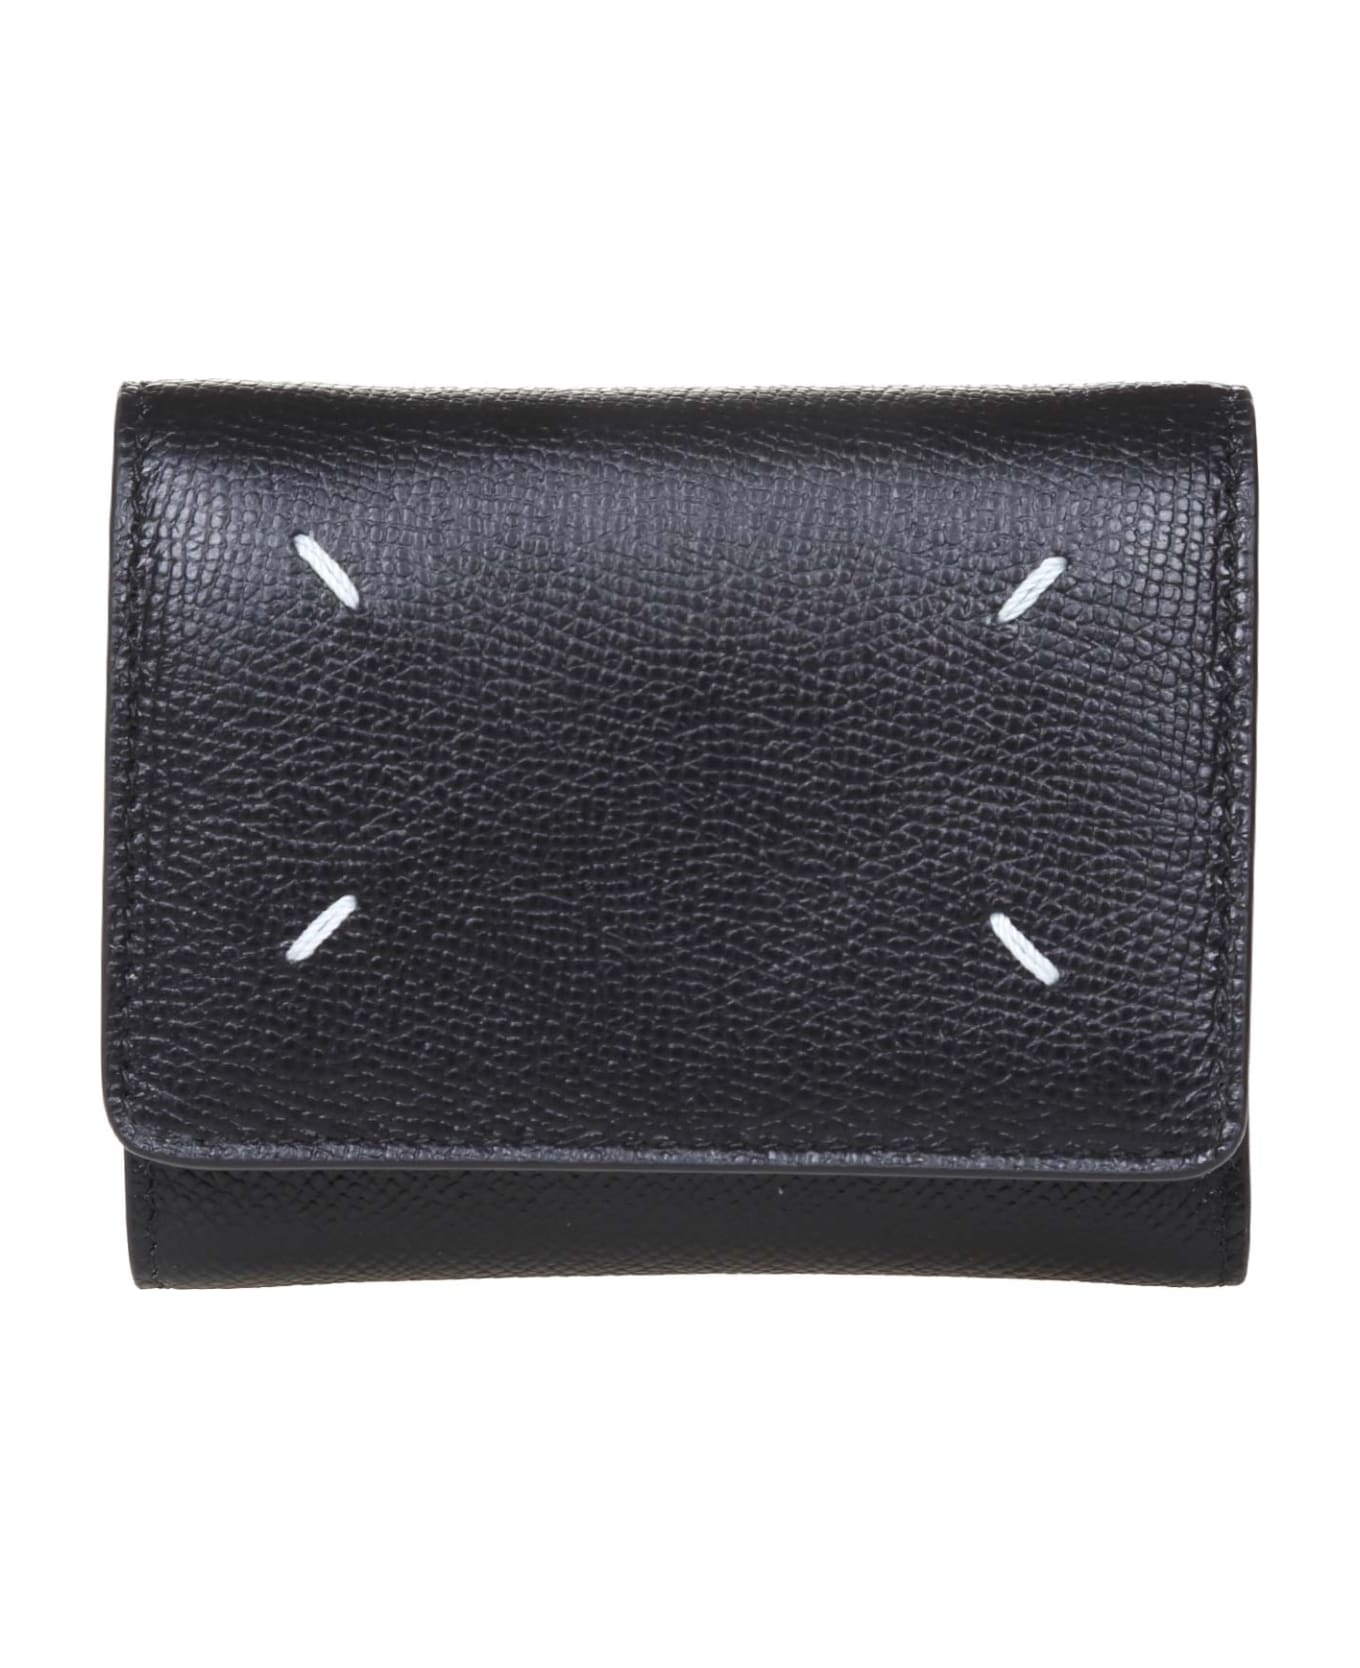 Maison Margiela Black Leather Wallet - Black